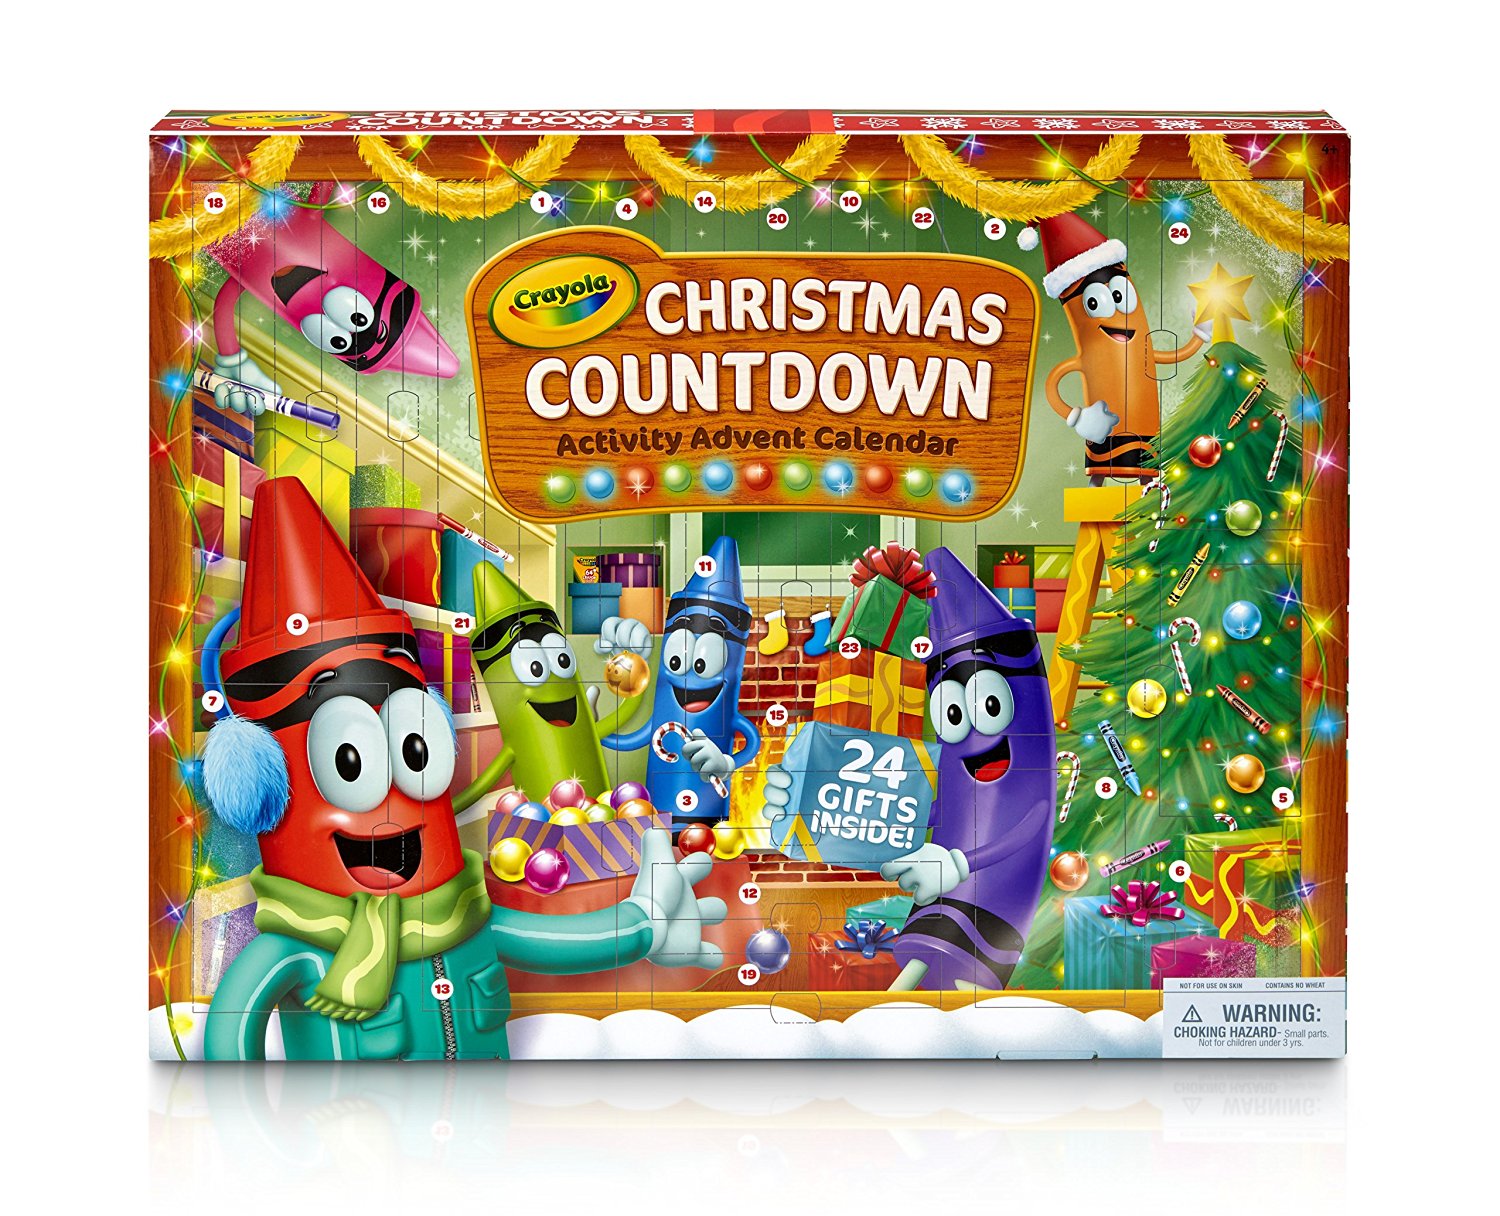 Crayola Christmas Countdown Activity Advent Calendar – Just $21.99!